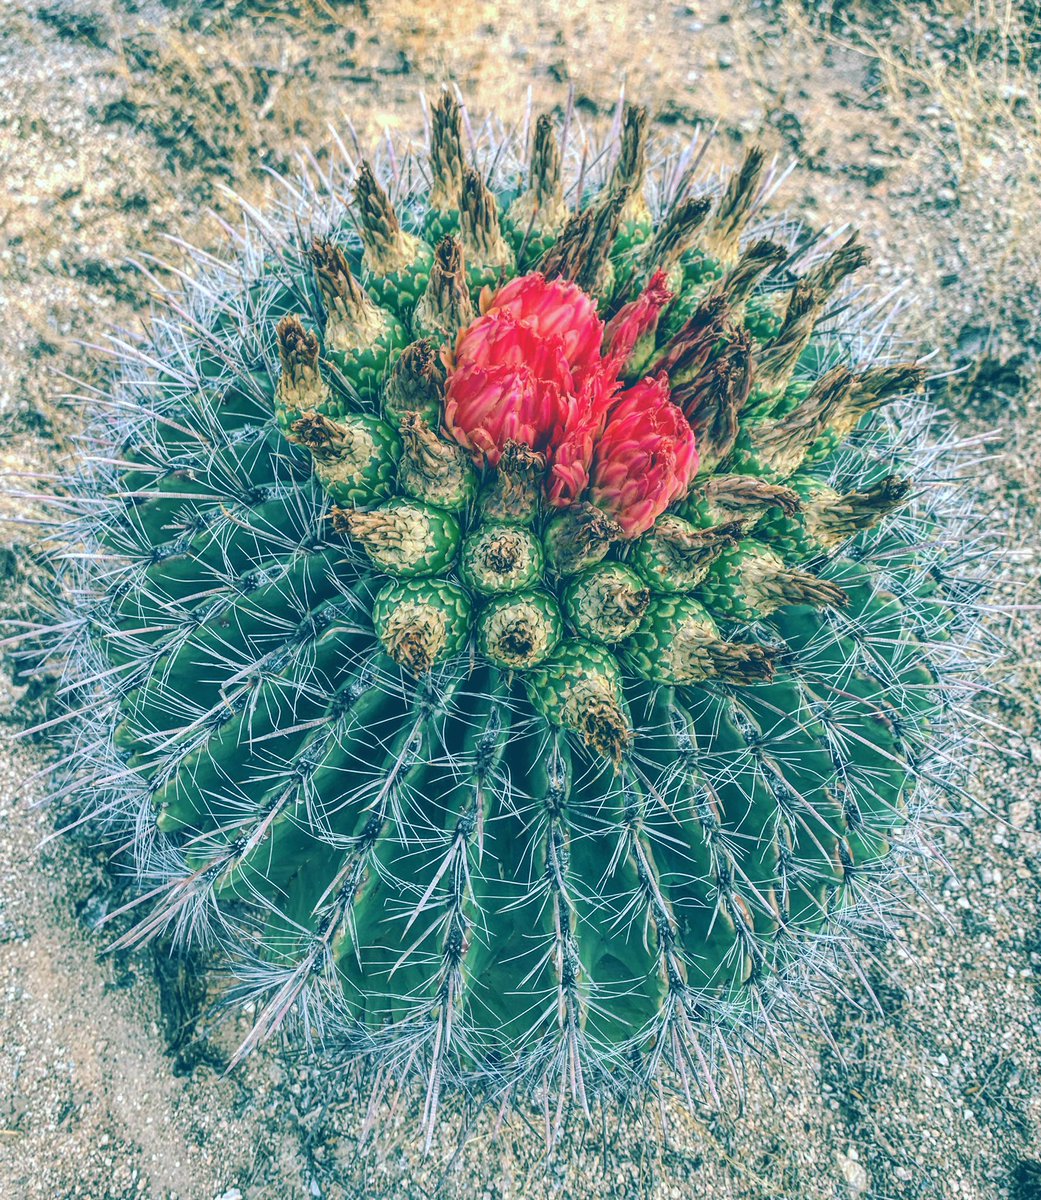 Feathery delicate baby cactus blooming offtrail this morning in @SabinoCanyonAZ #highdesertbeauty #tucson @FriendsSabino @VisitTucsonAZ